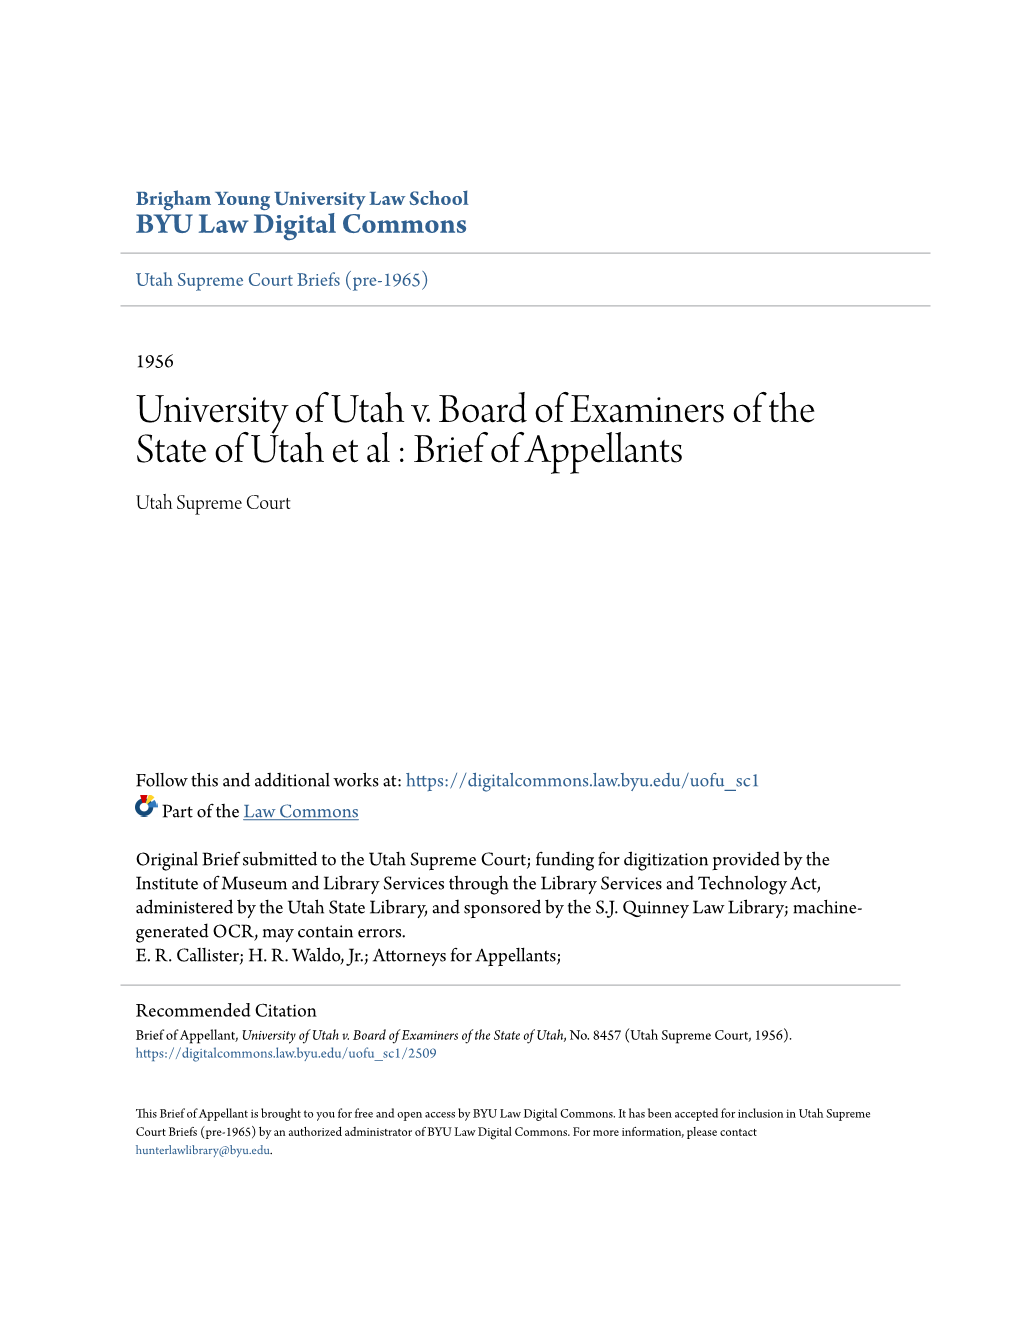 University of Utah V. Board of Examiners of the State of Utah Et Al : Brief of Appellants Utah Supreme Court